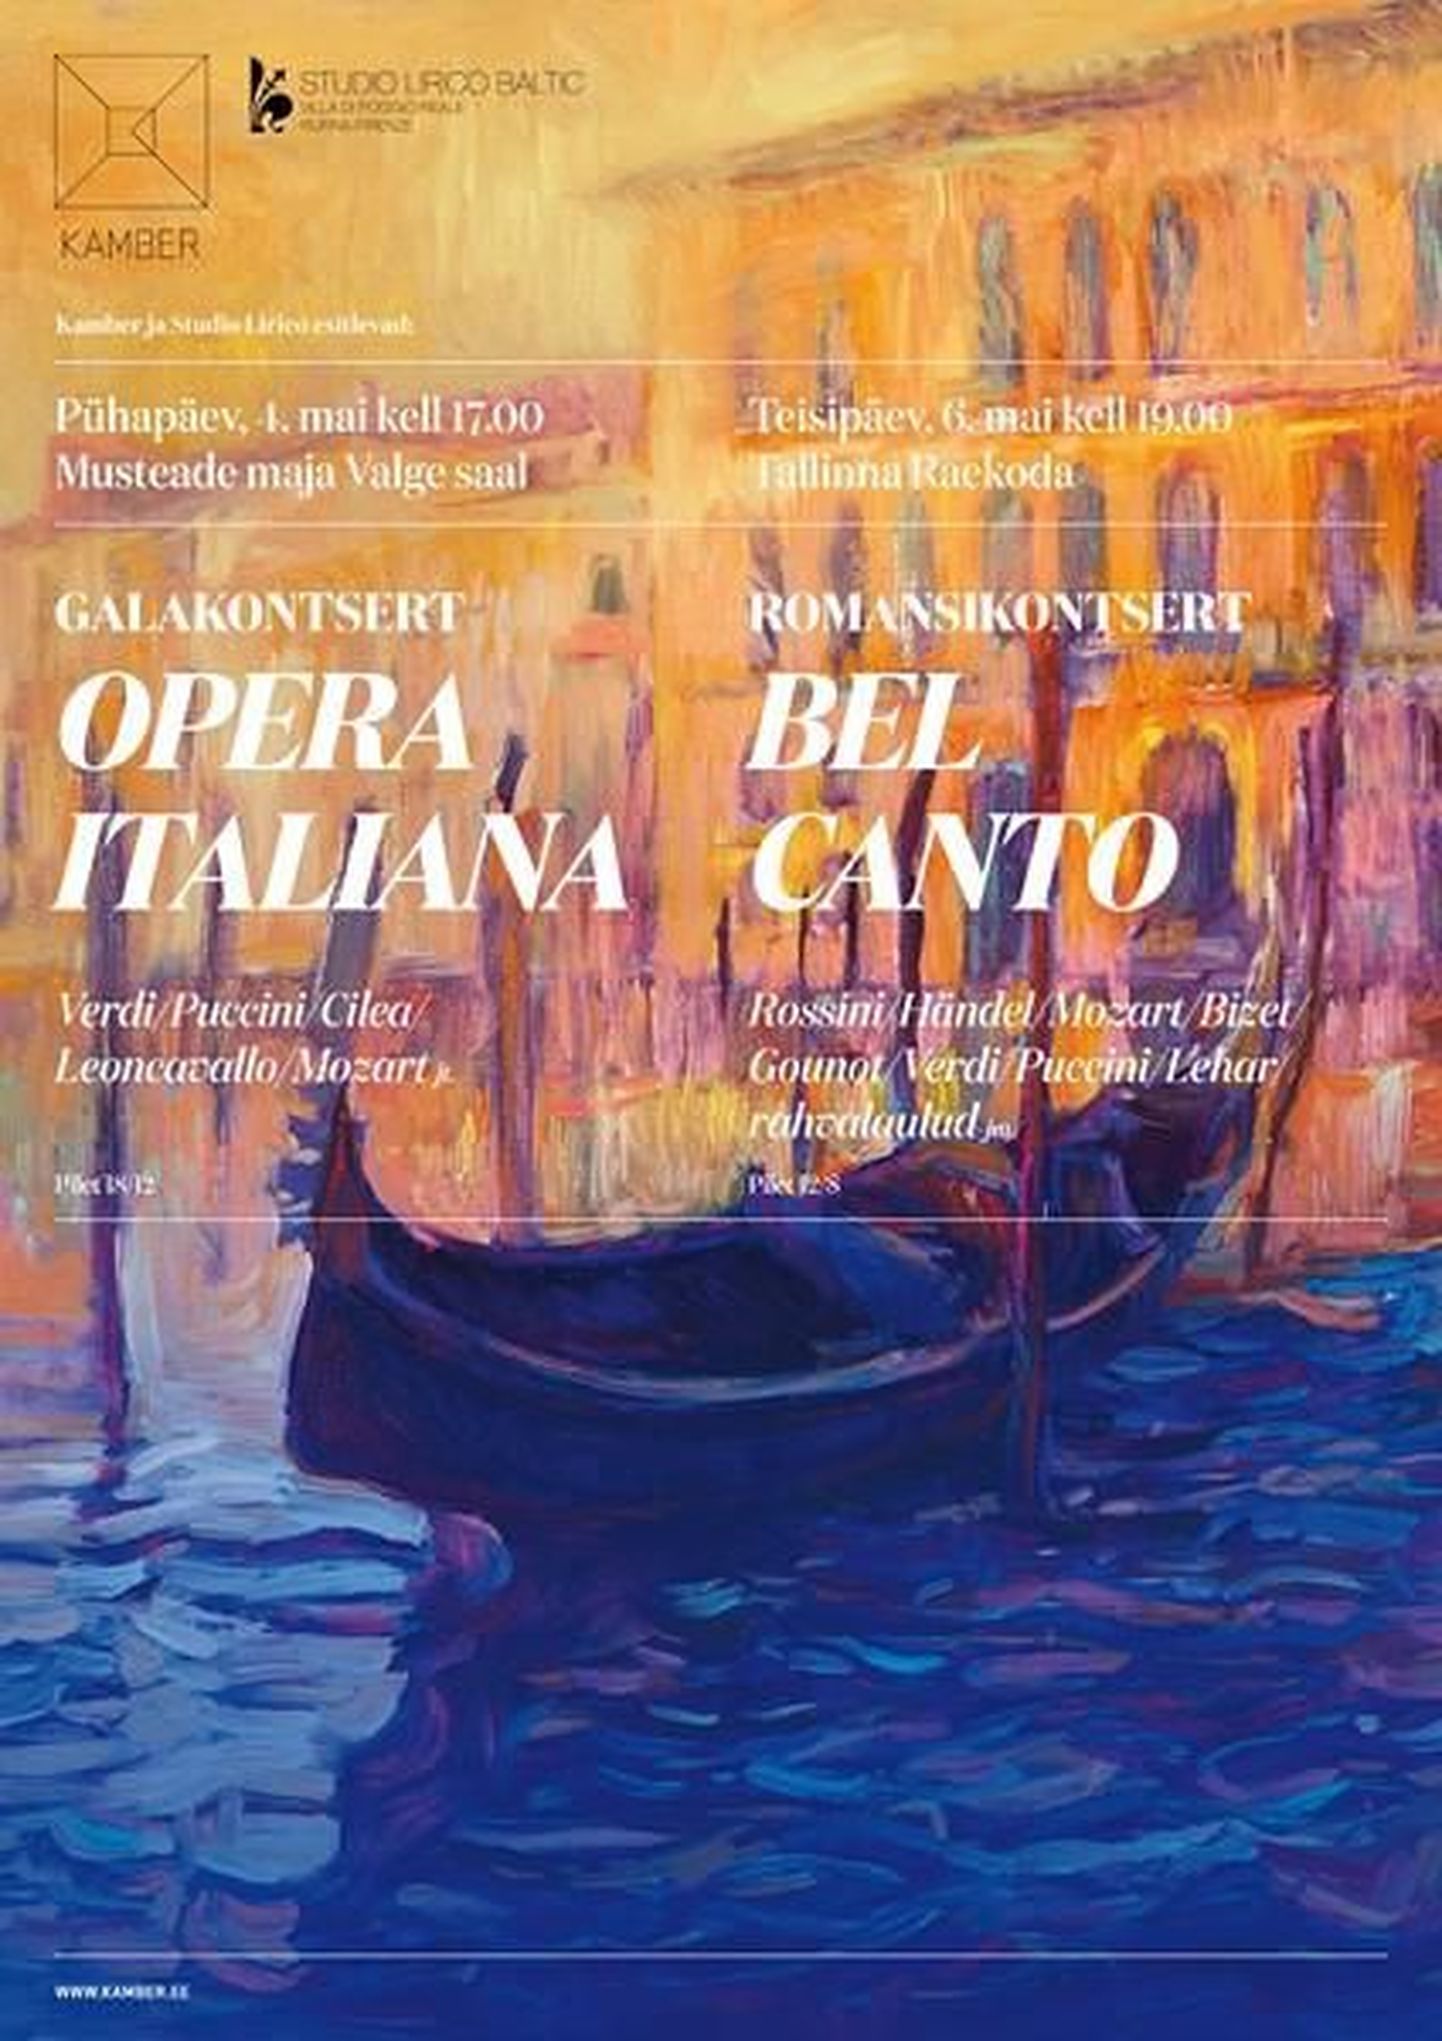 Galakontsert Opera Italiana